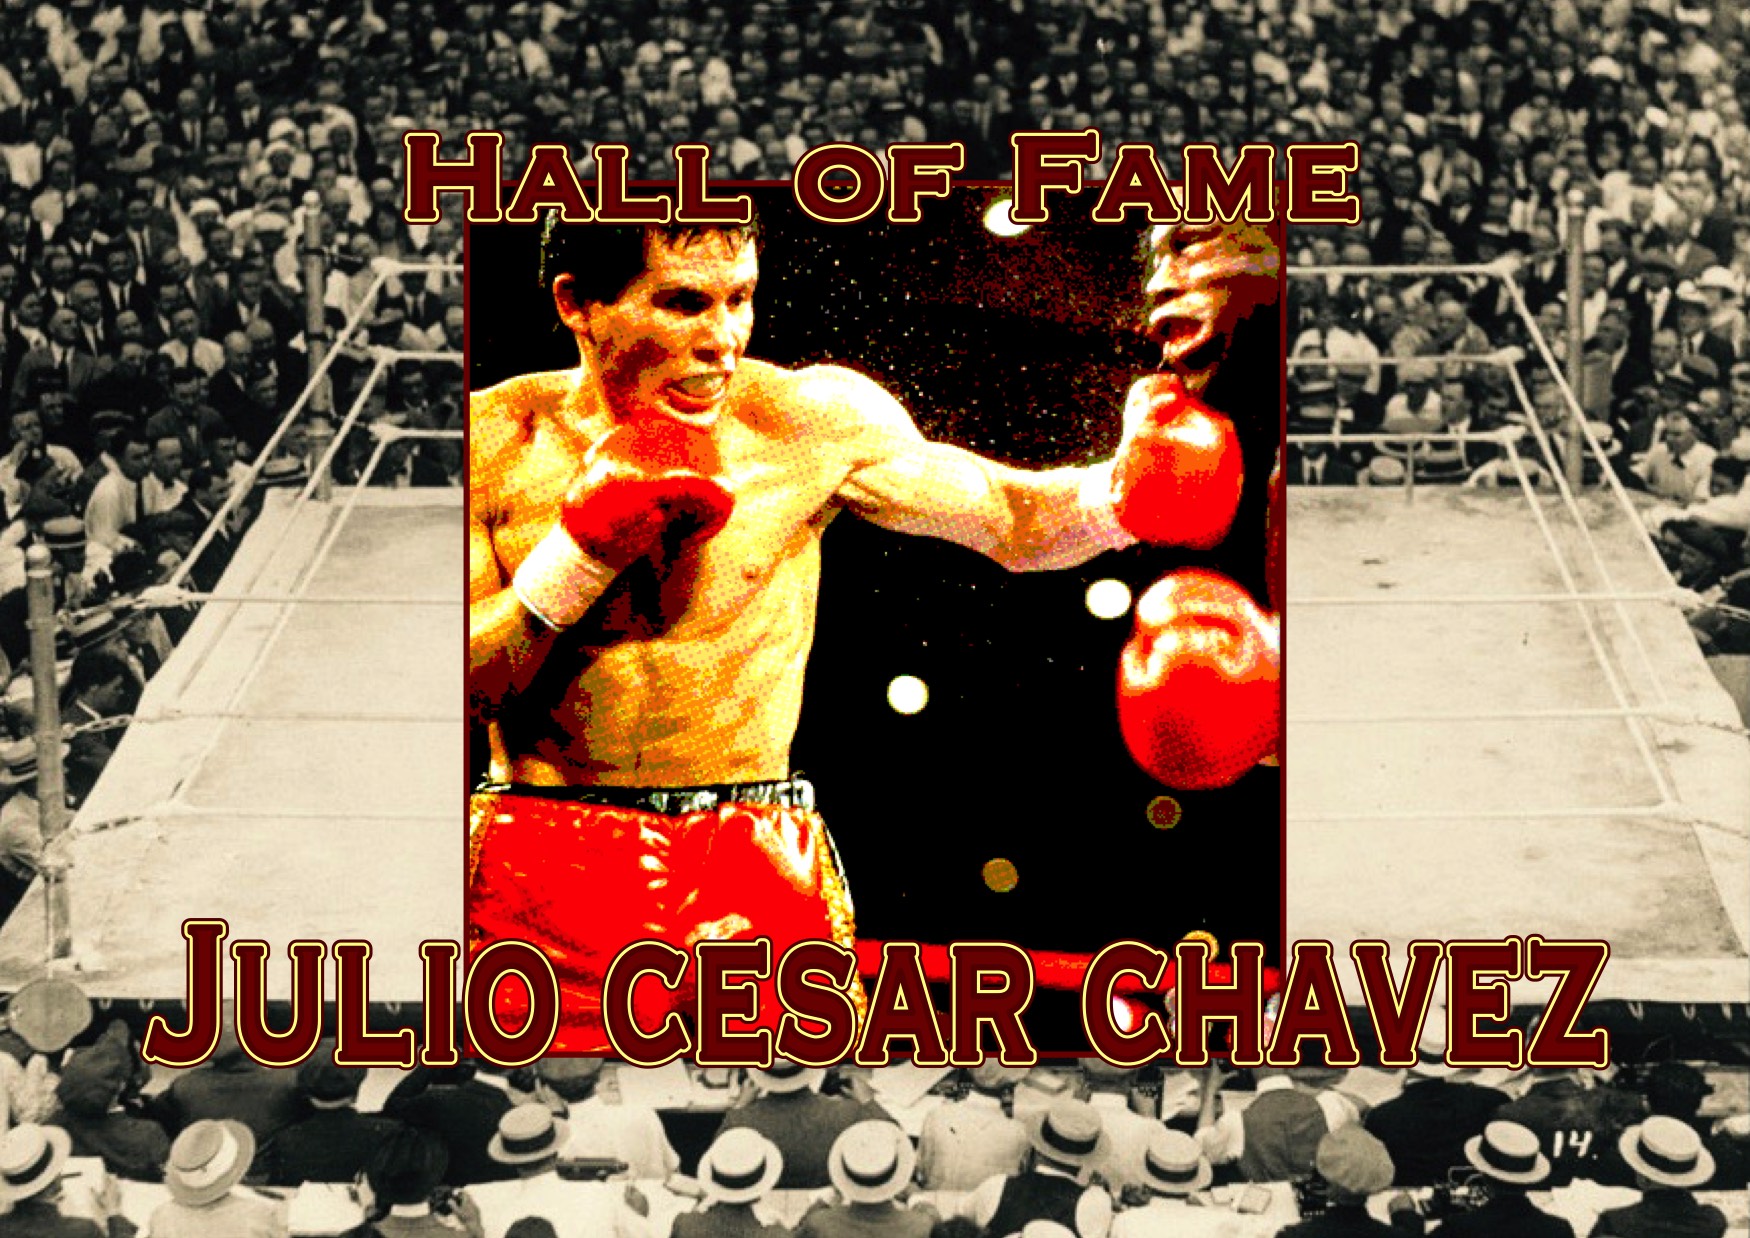 Hall of Fame: JULIO CESAR CHAVEZ